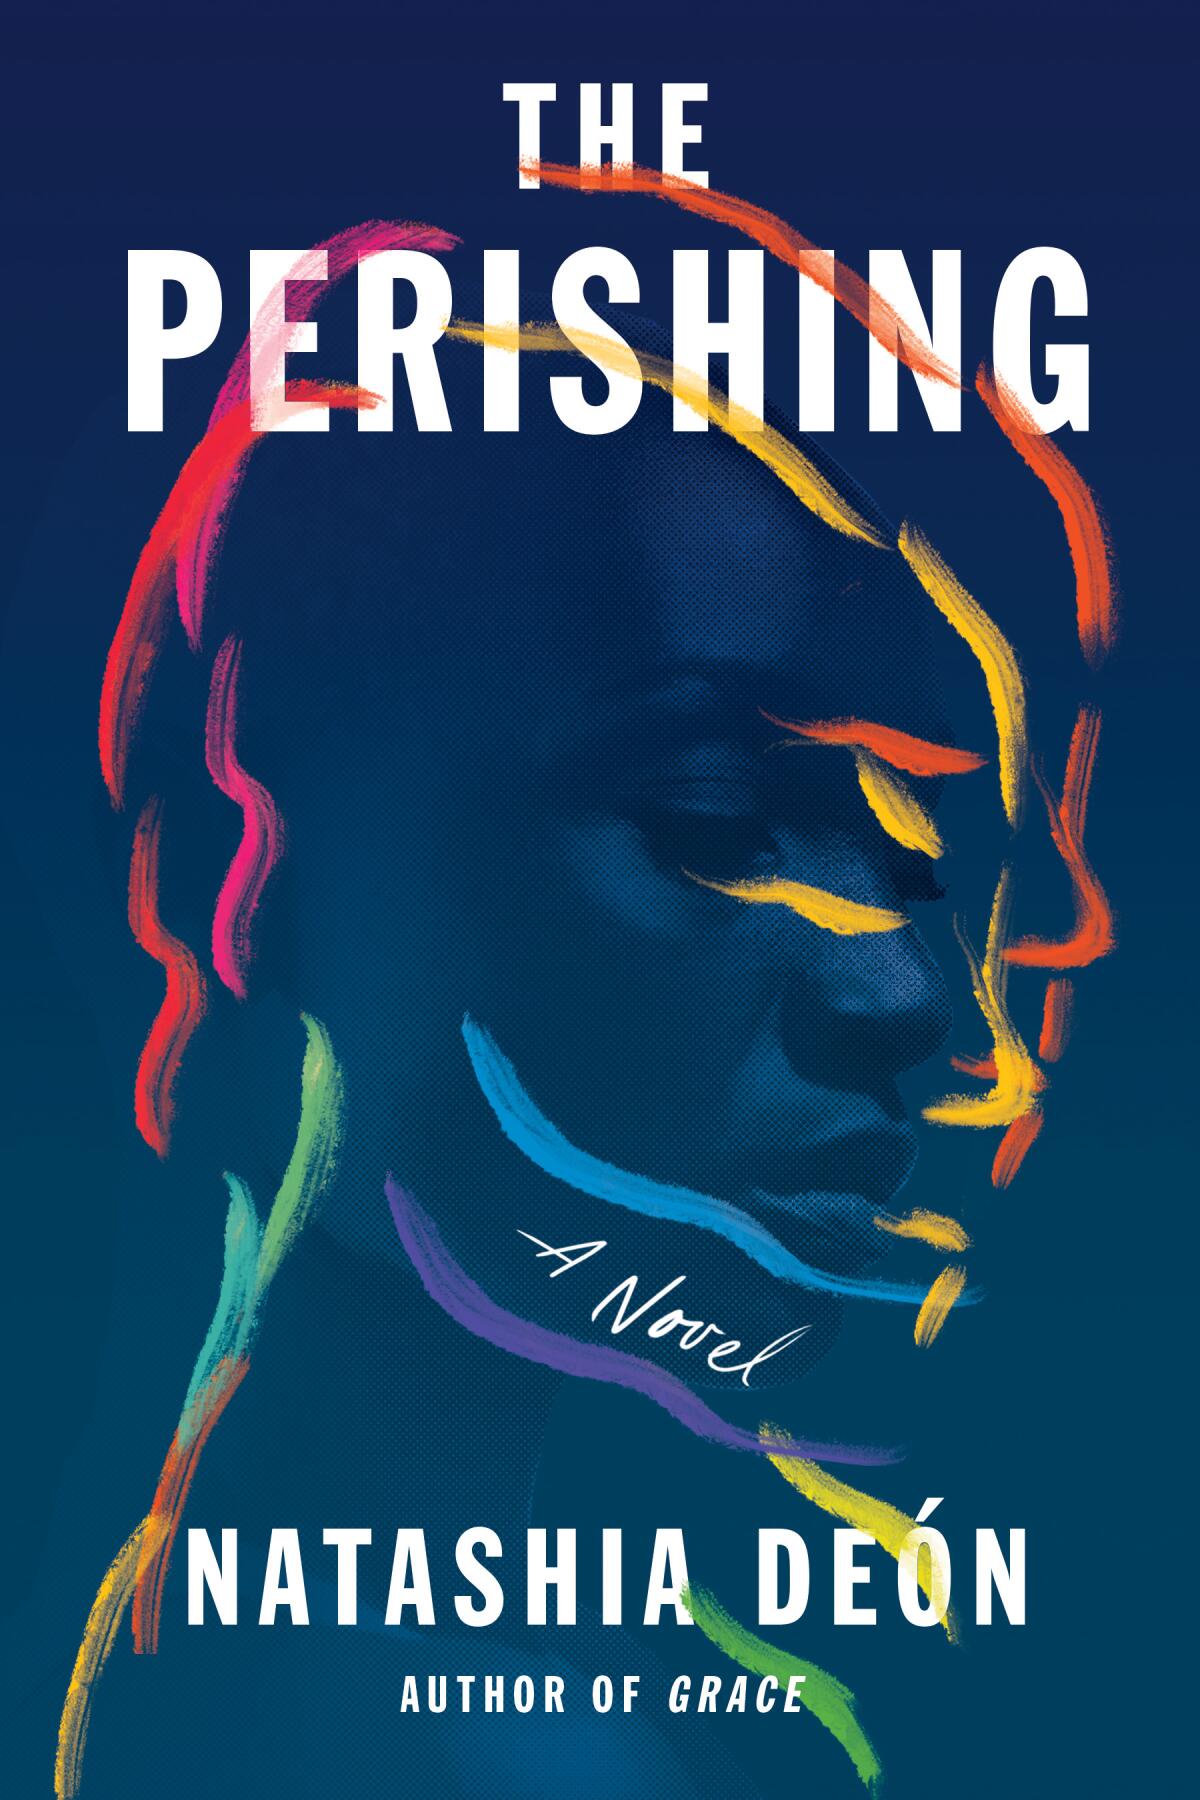 The book cover of "The Perishing" by Natashia Deón